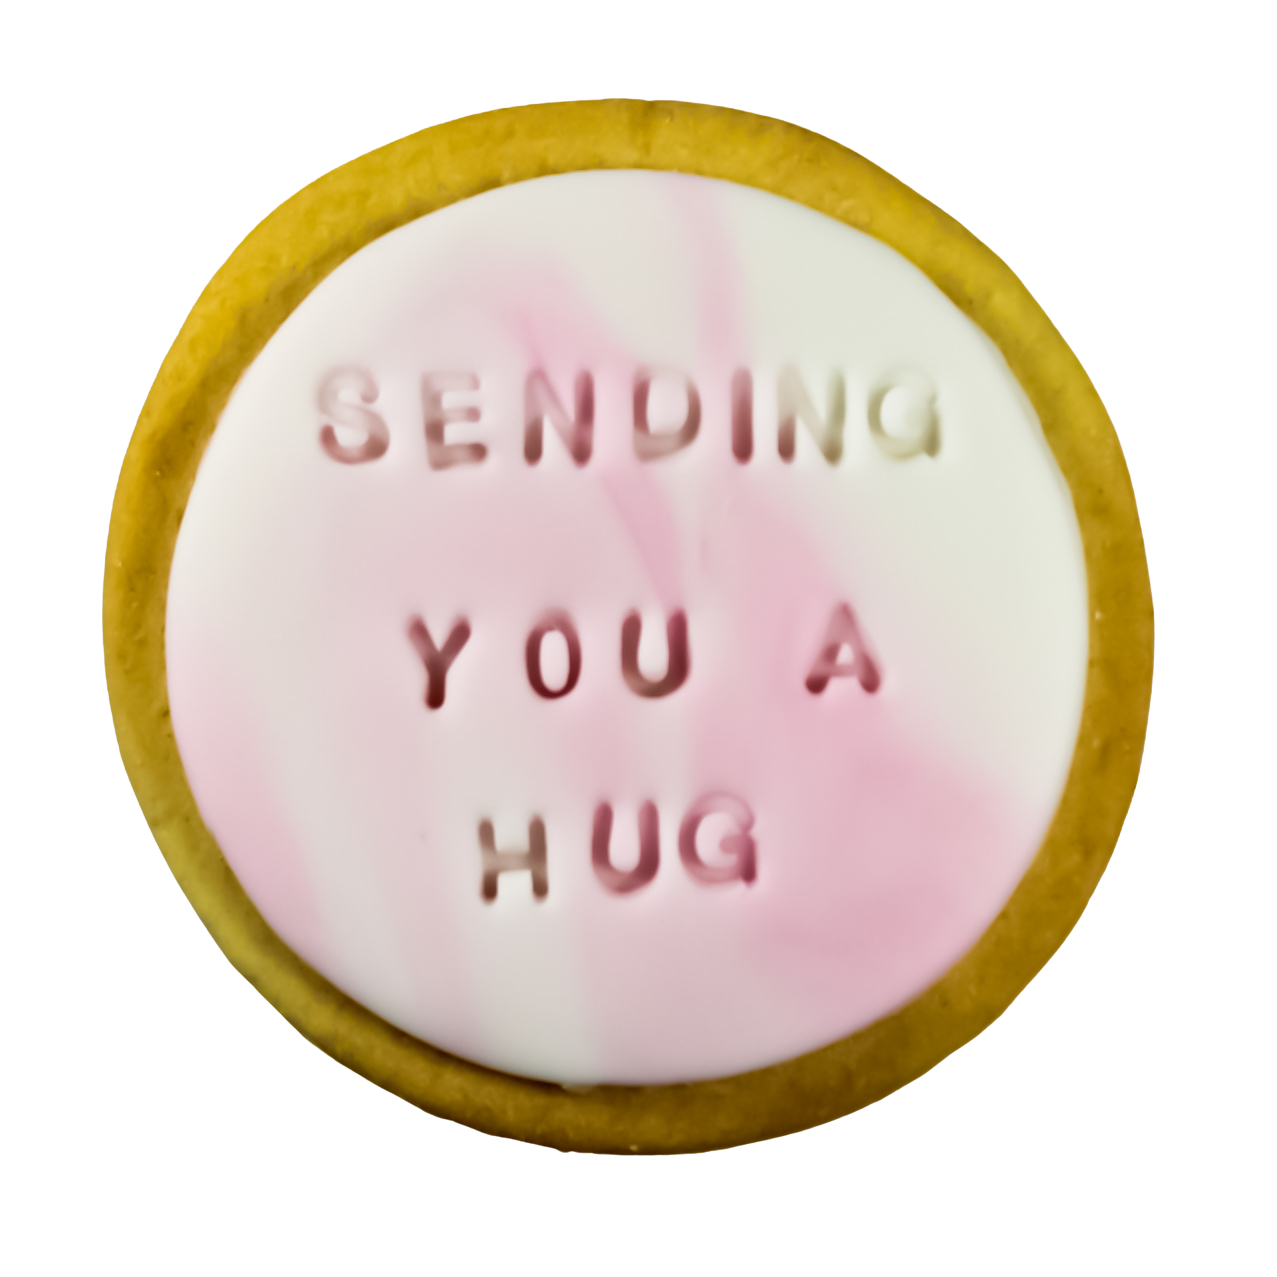 Sending You A Hug l Handmade Iced Cookie